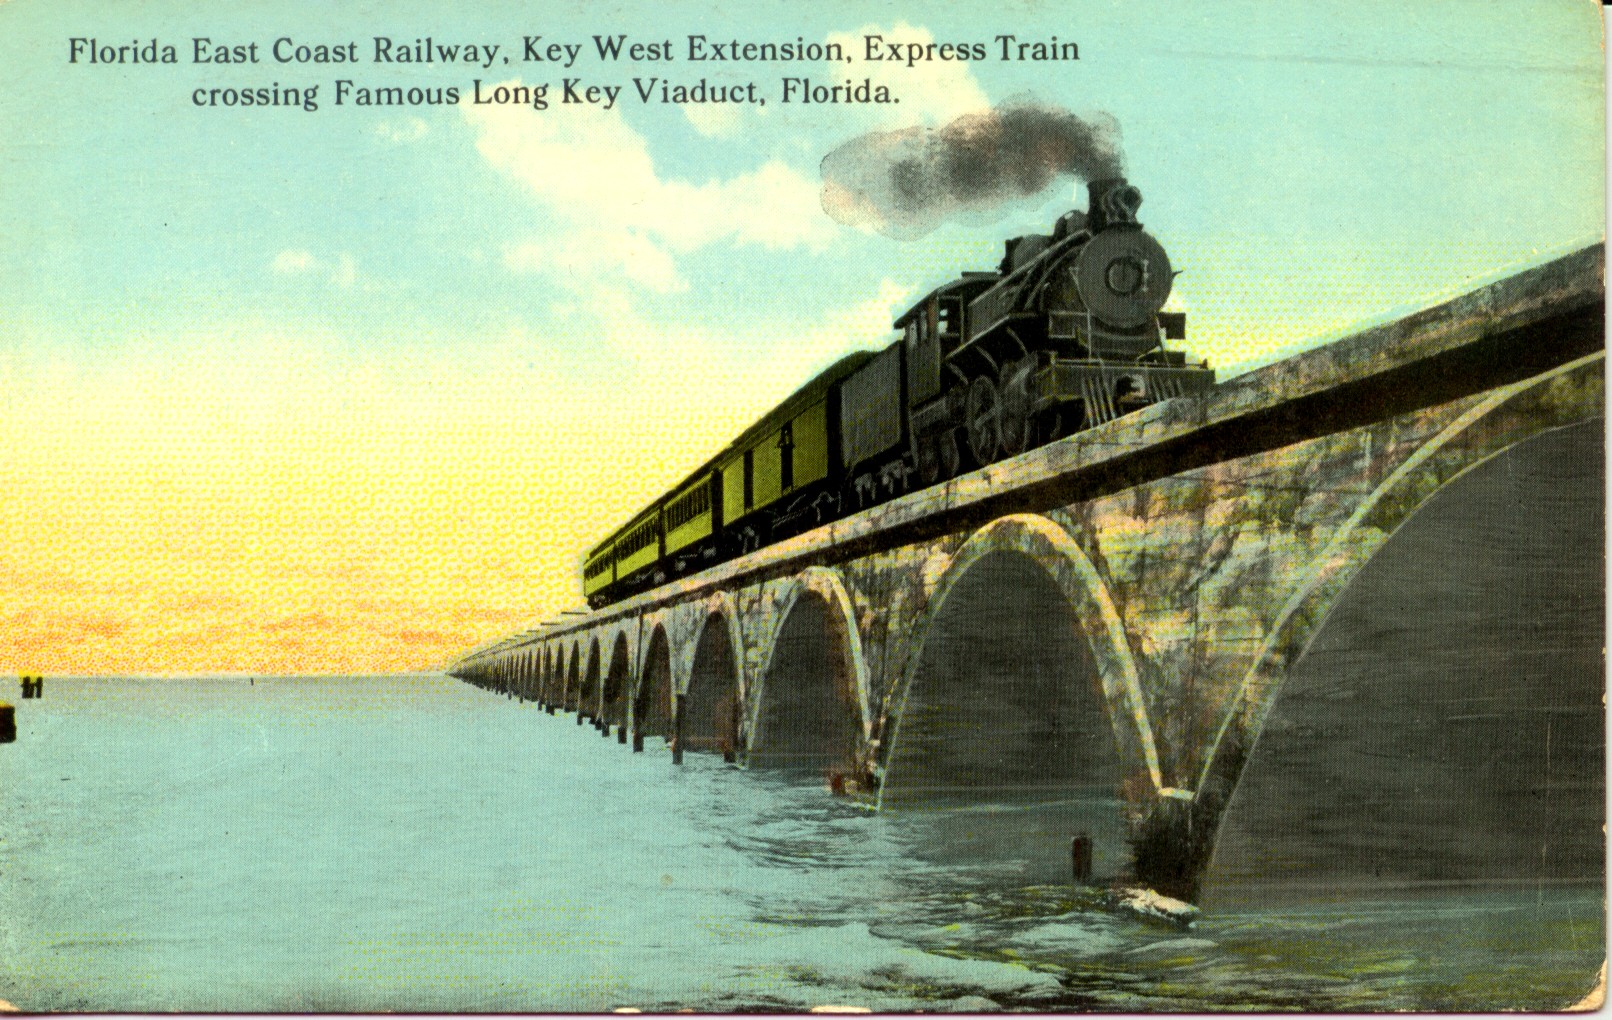 Key West Extension